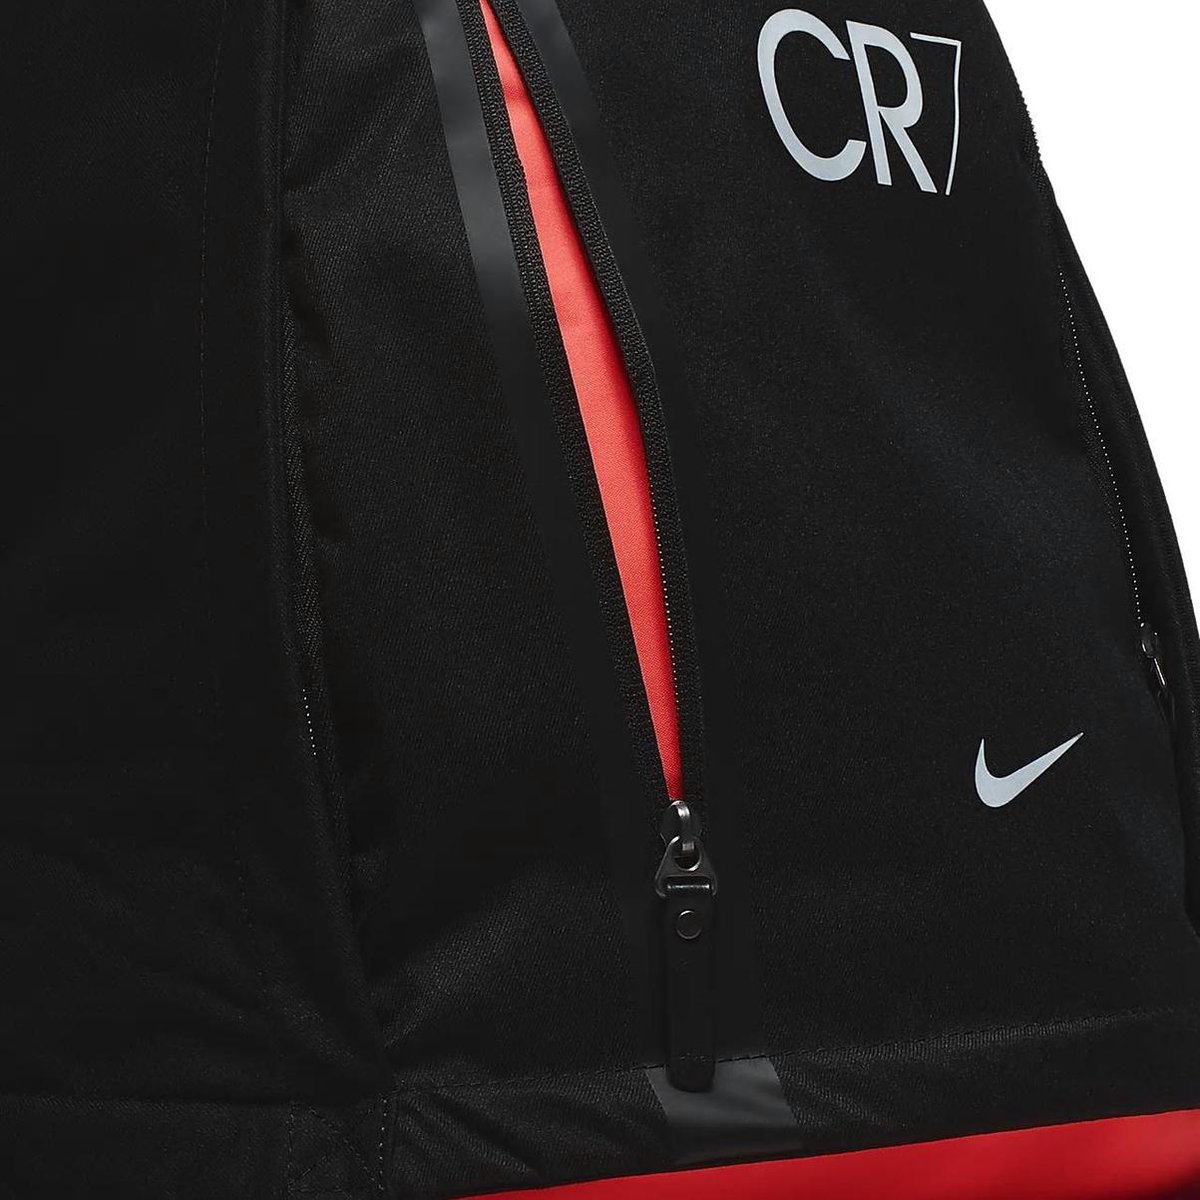 Nike CR7 rugtas voetbaltas sporttas - Ronaldo - zwart | bol